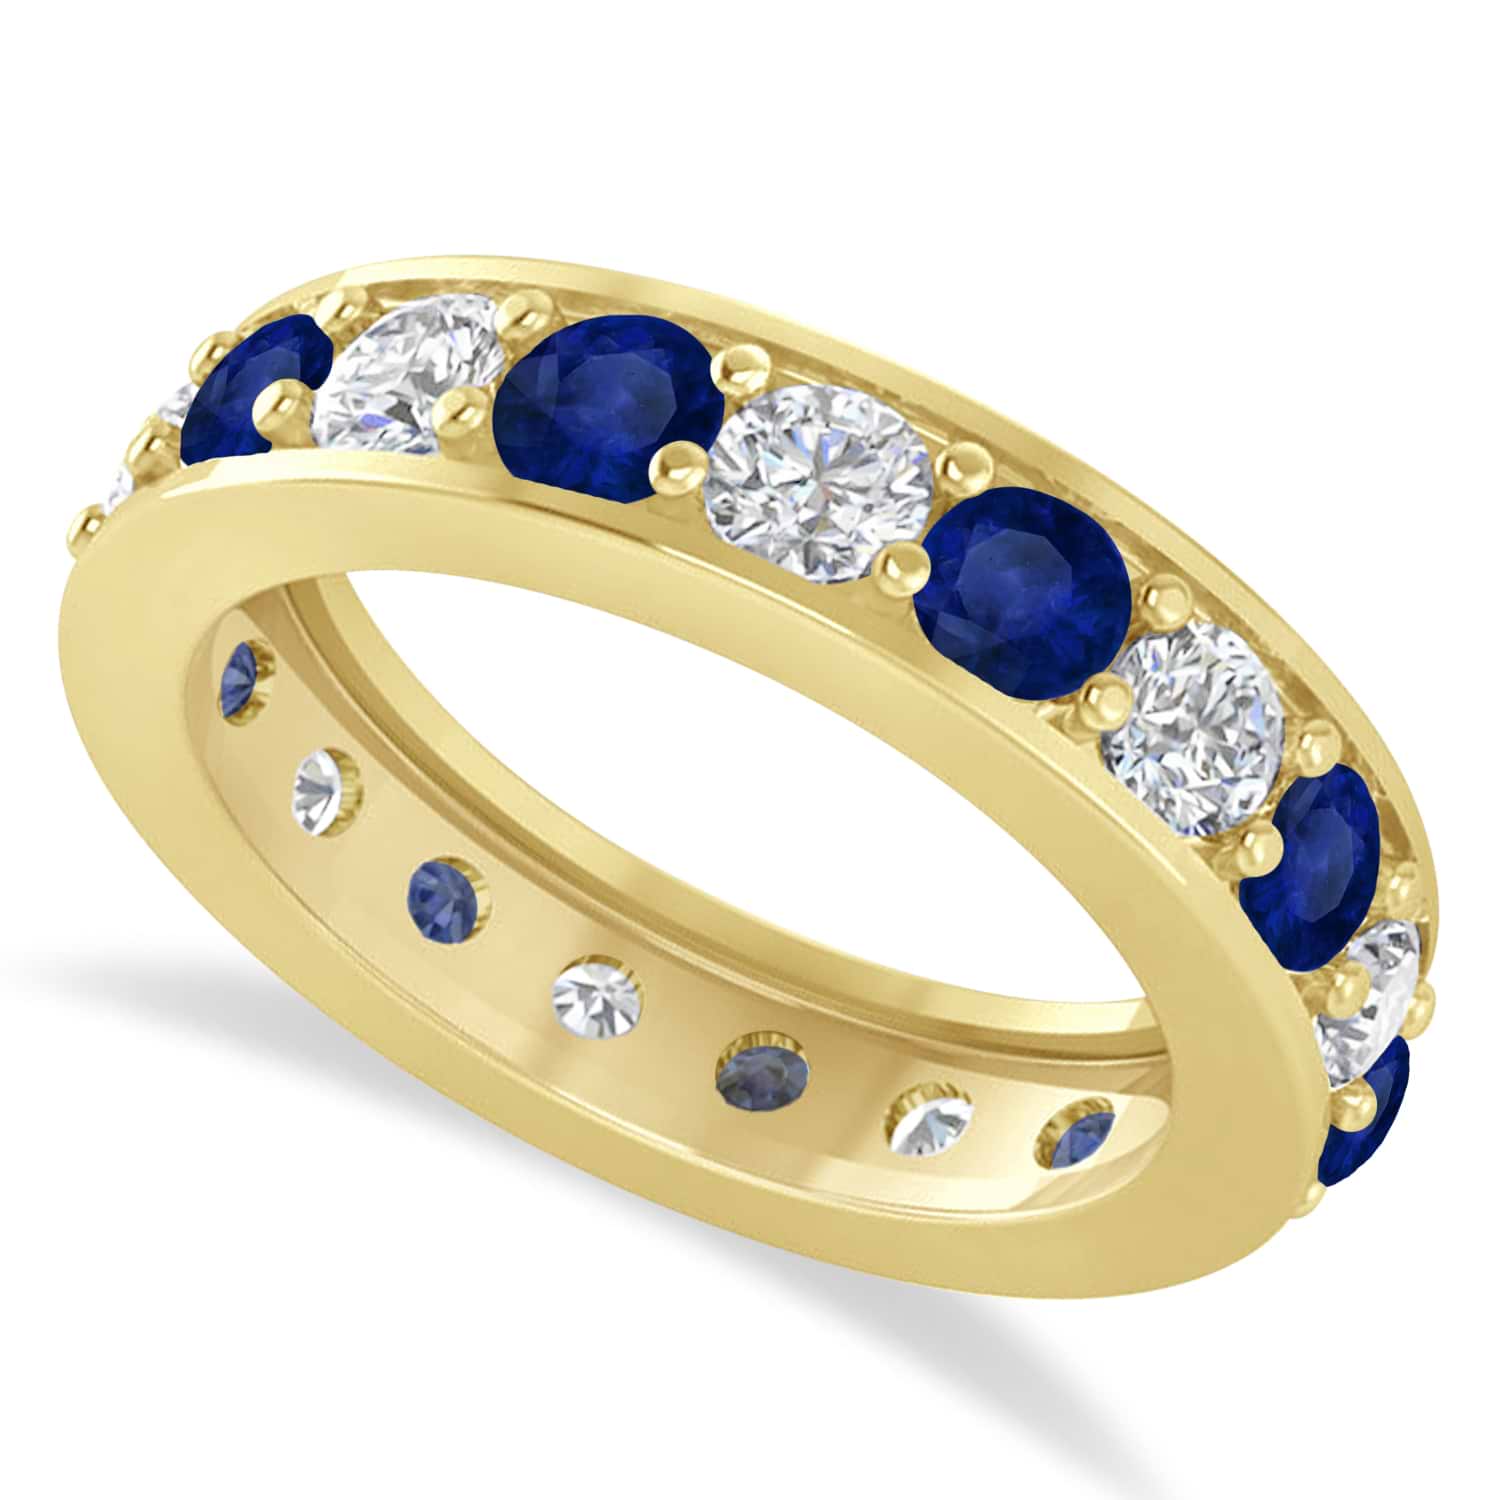 Diamond & Blue Sapphire Eternity Wedding Band 14k Yellow Gold (2.85ct)